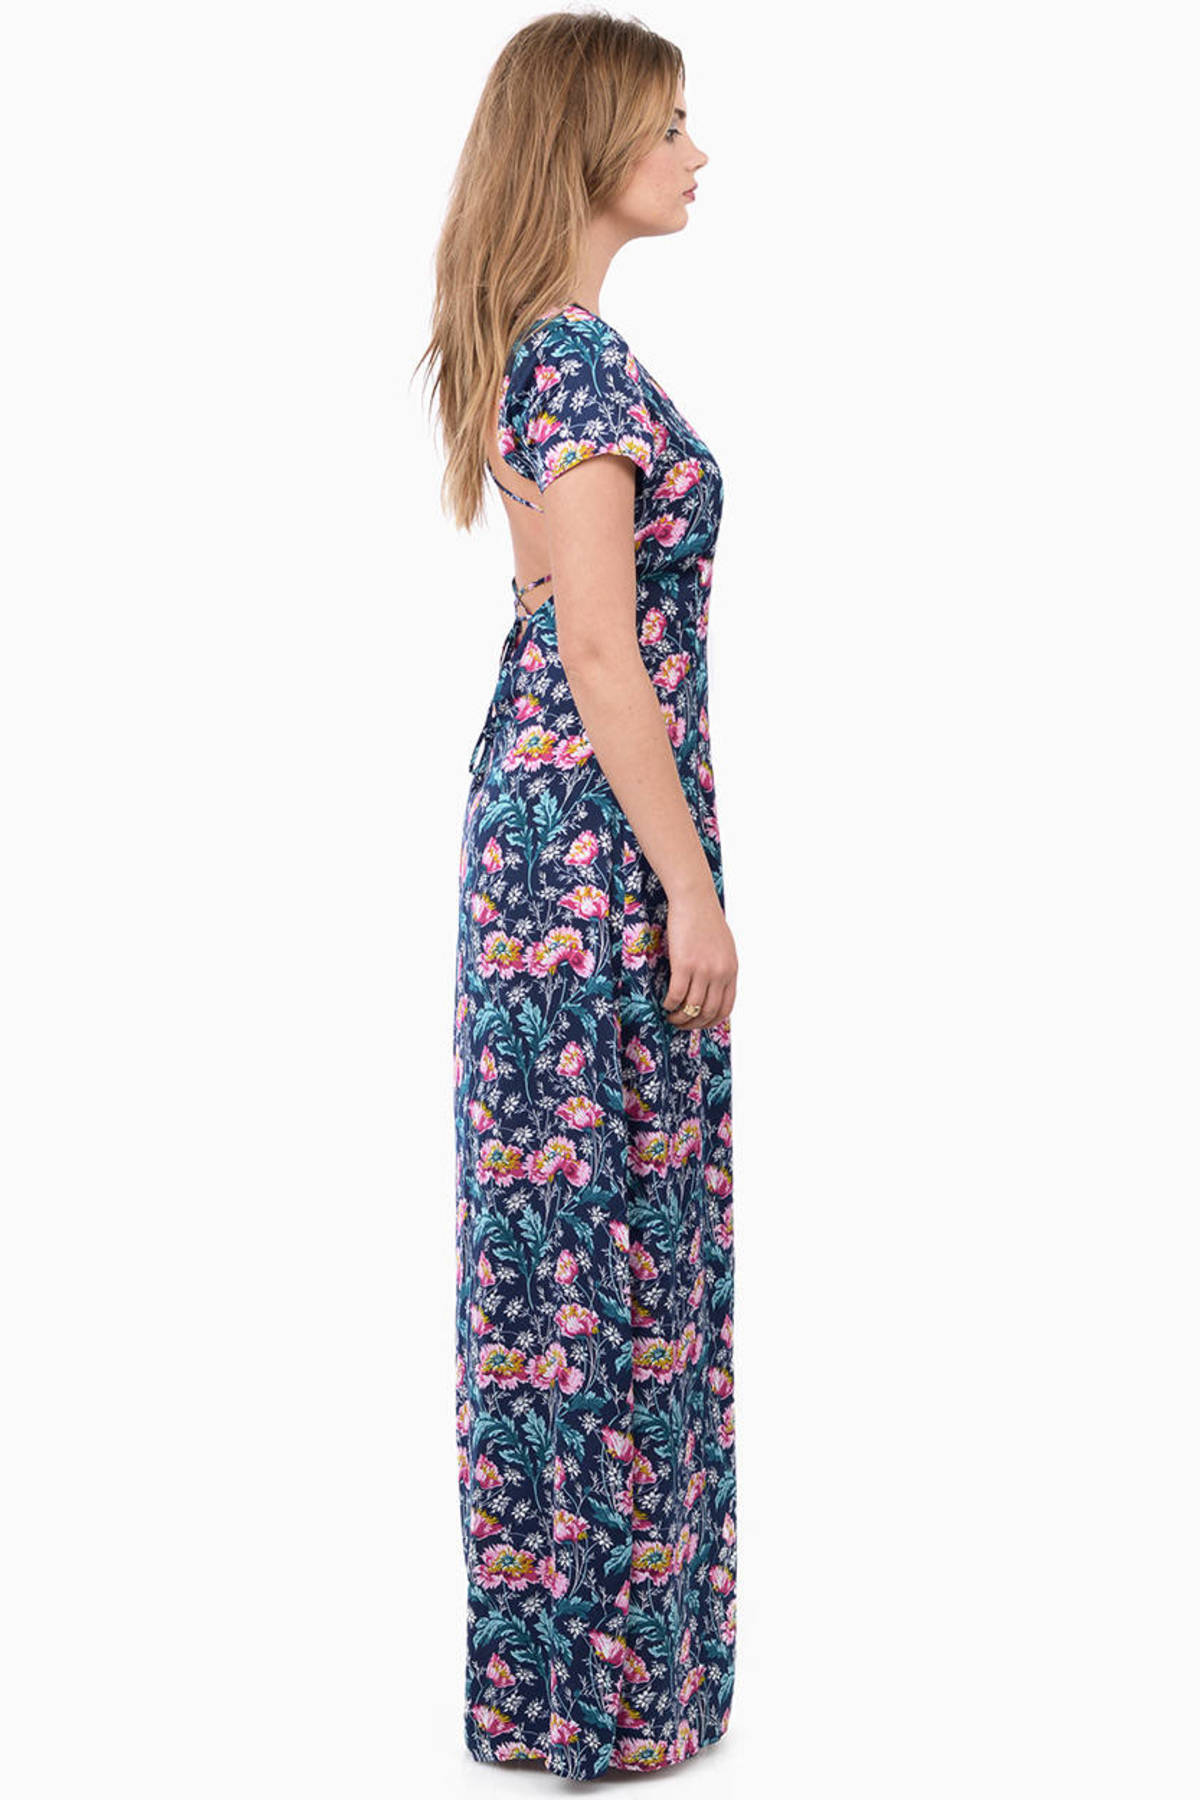 Natural Wonders Maxi Dress in Navy Floral - $11 | Tobi US